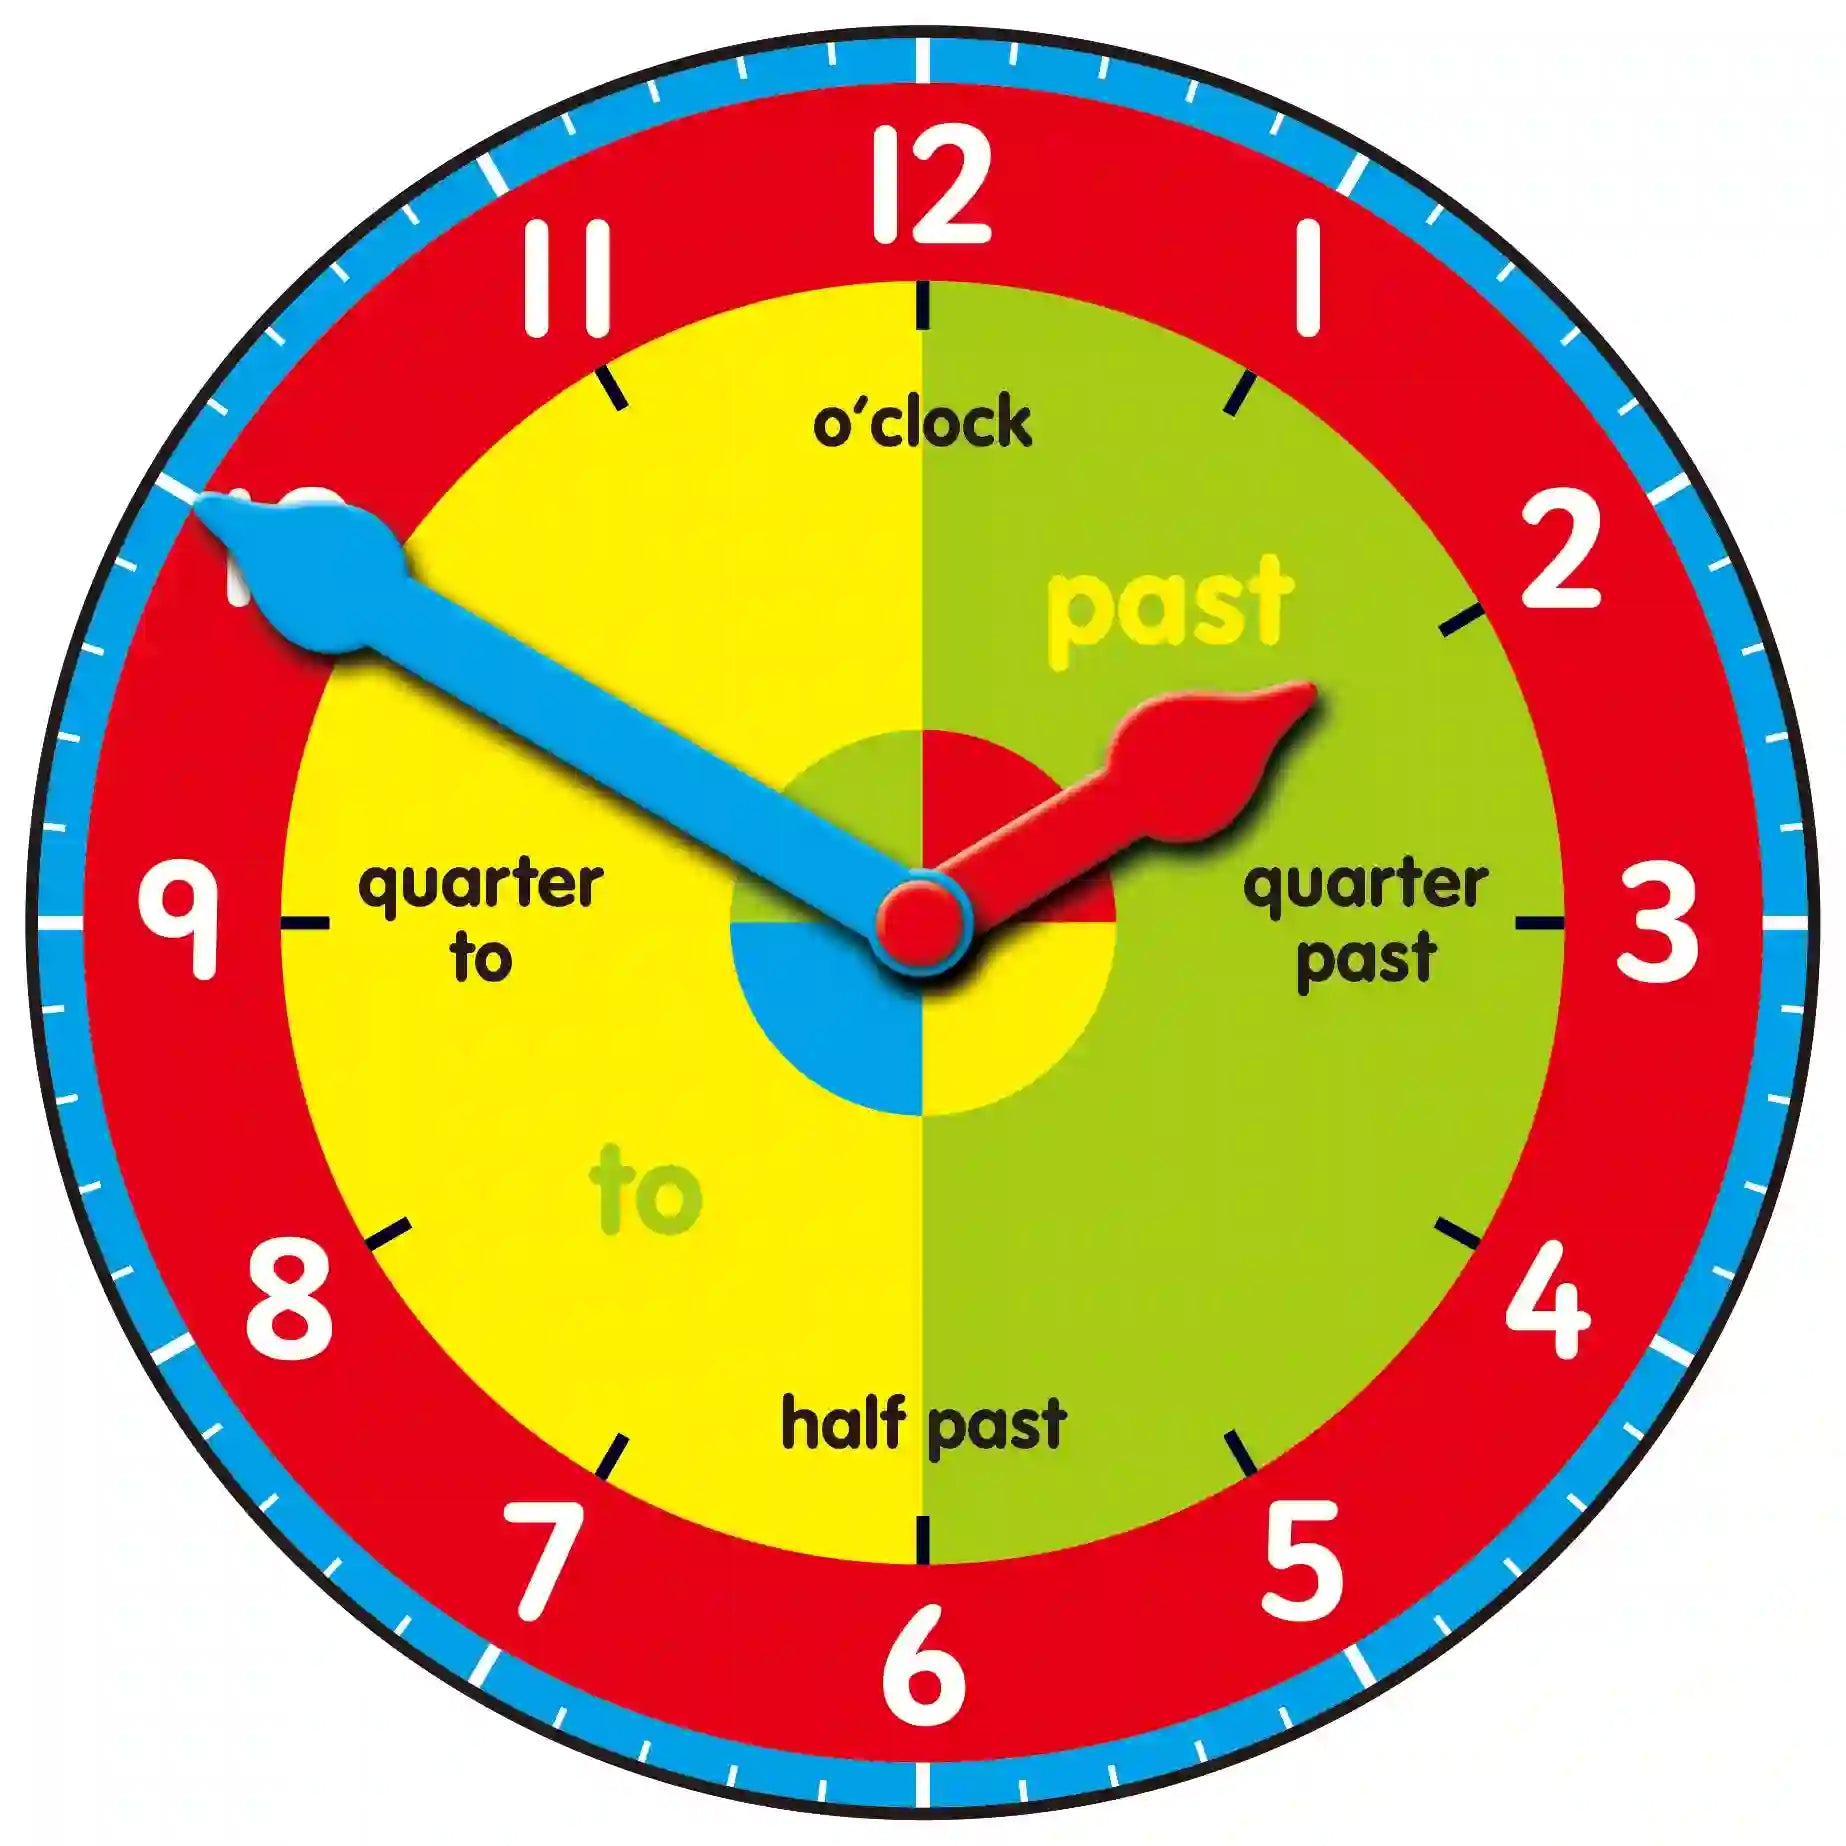 Galt - Tell The Time Set